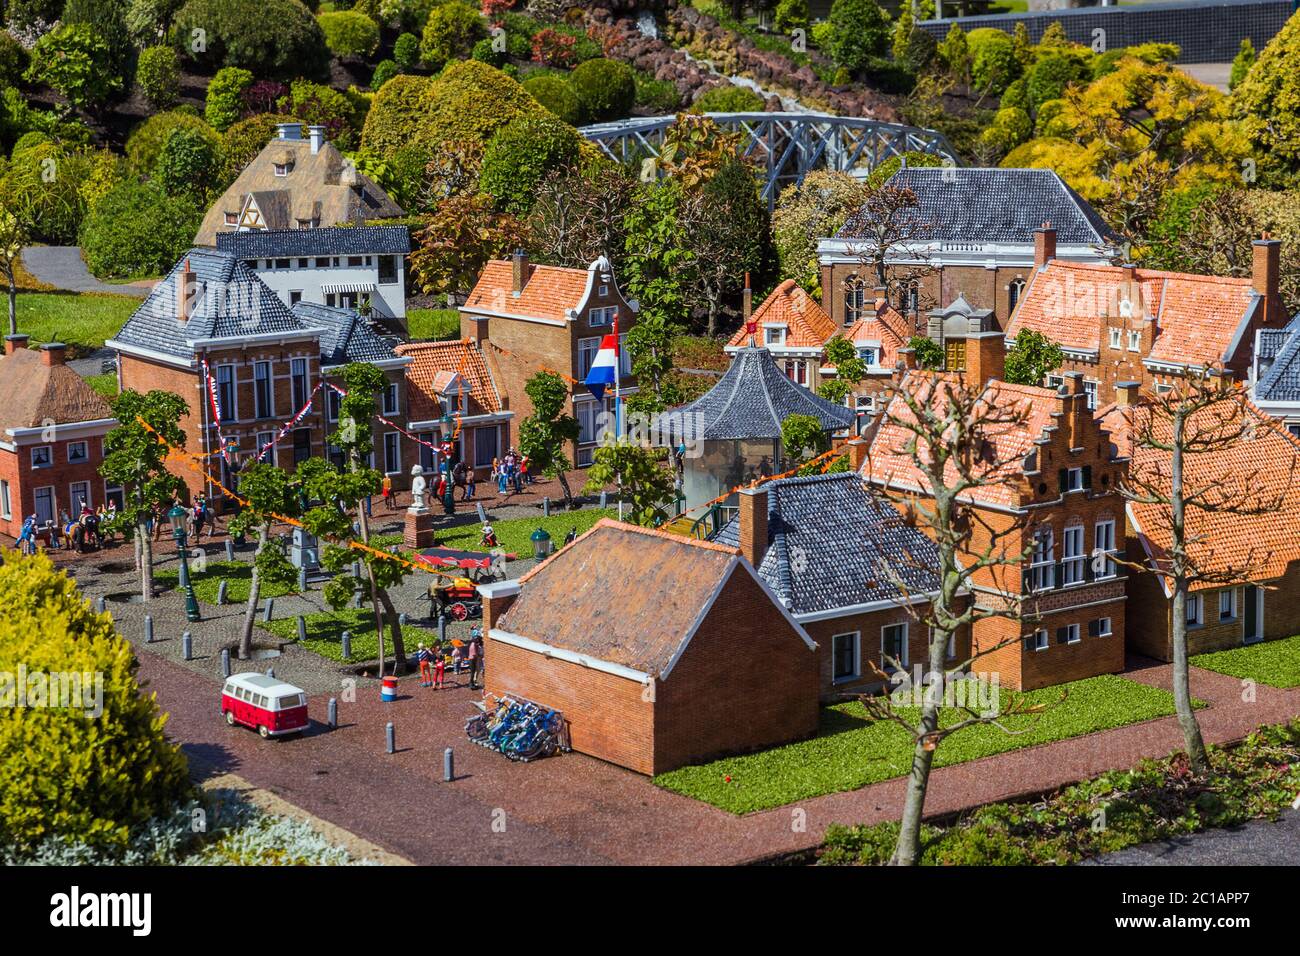 The Hague, Netherlands - April 26, 2017: Village in Madurodam miniature park in The Hague Stock Photo